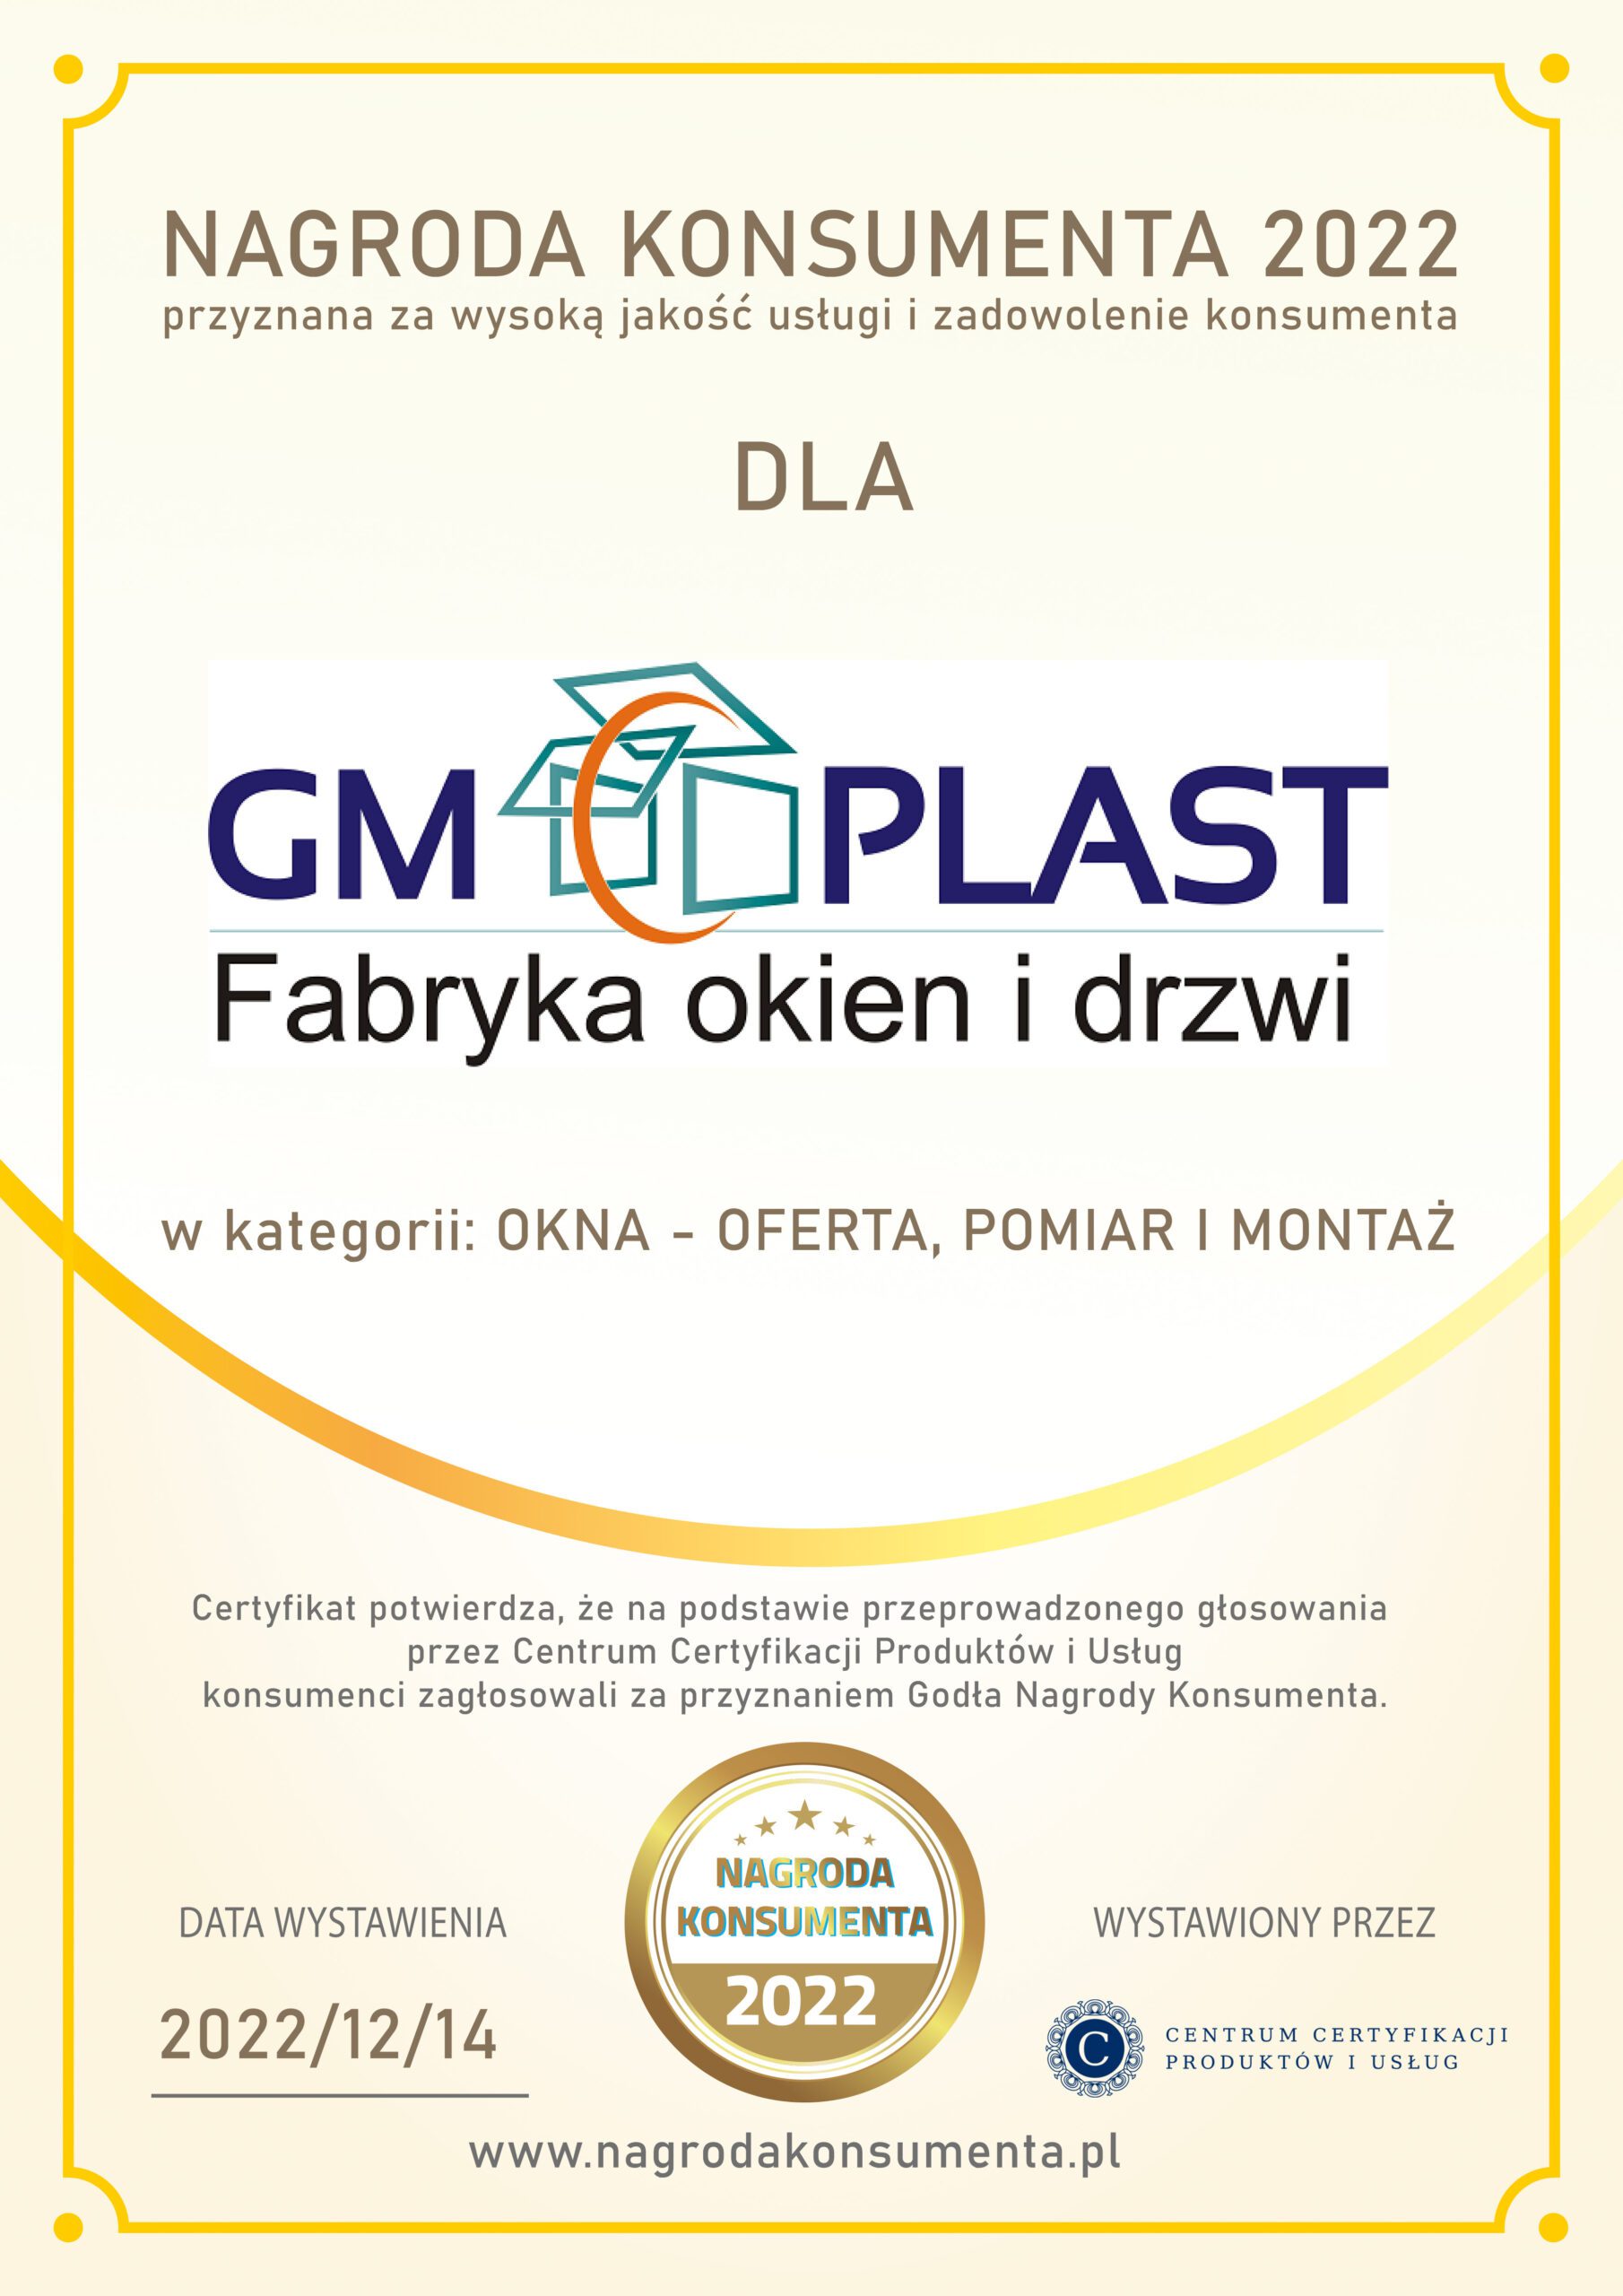 GM PLAST Consumer Award